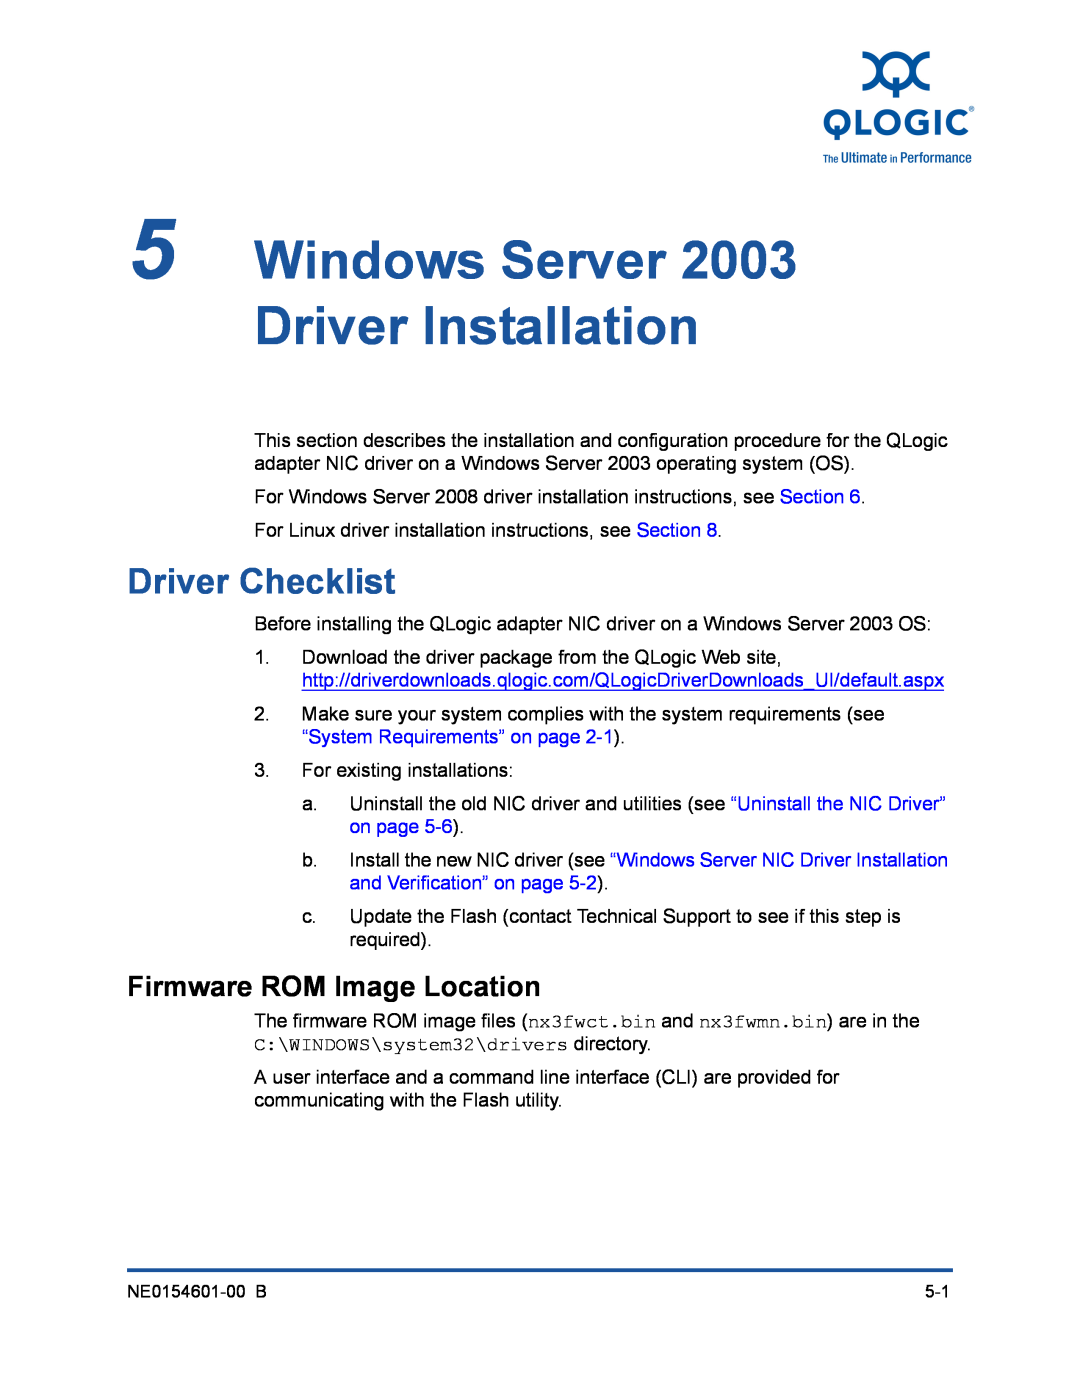 Q-Logic 3000, 3100 manual Windows Server Driver Installation, Driver Checklist, Firmware ROM Image Location 